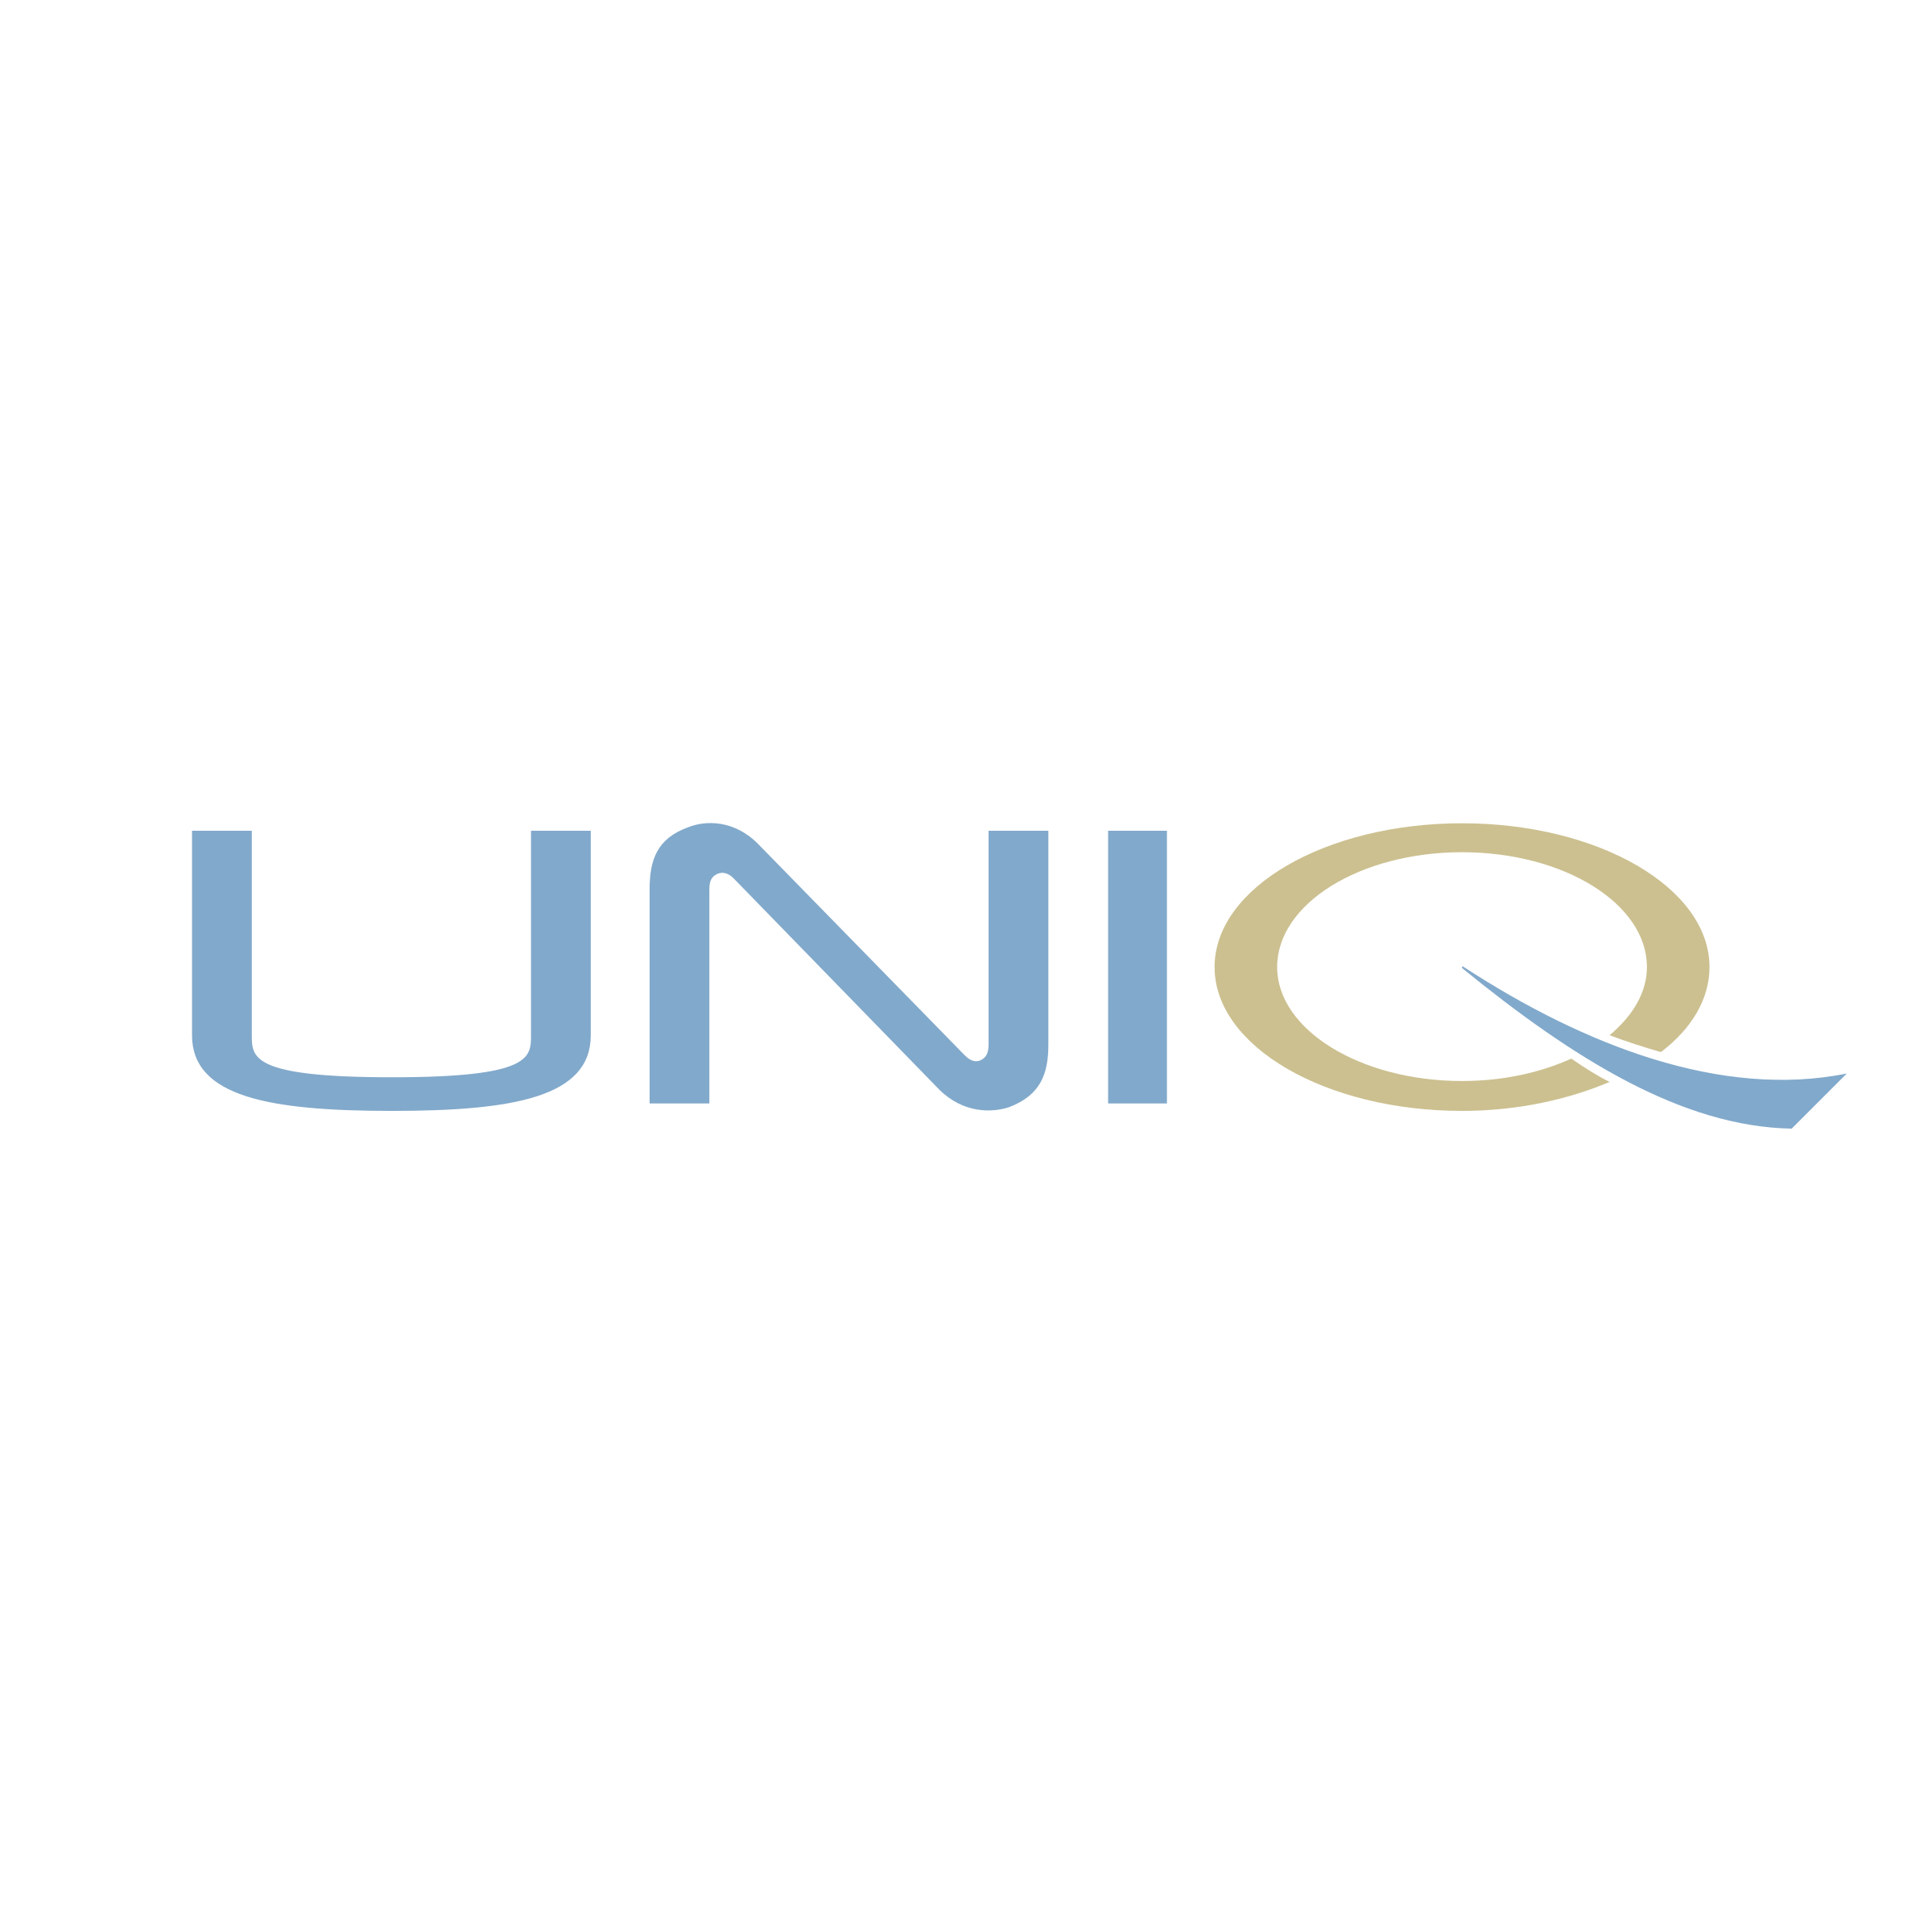 Uniq Logo - Uniq Logo PNG Transparent & SVG Vector